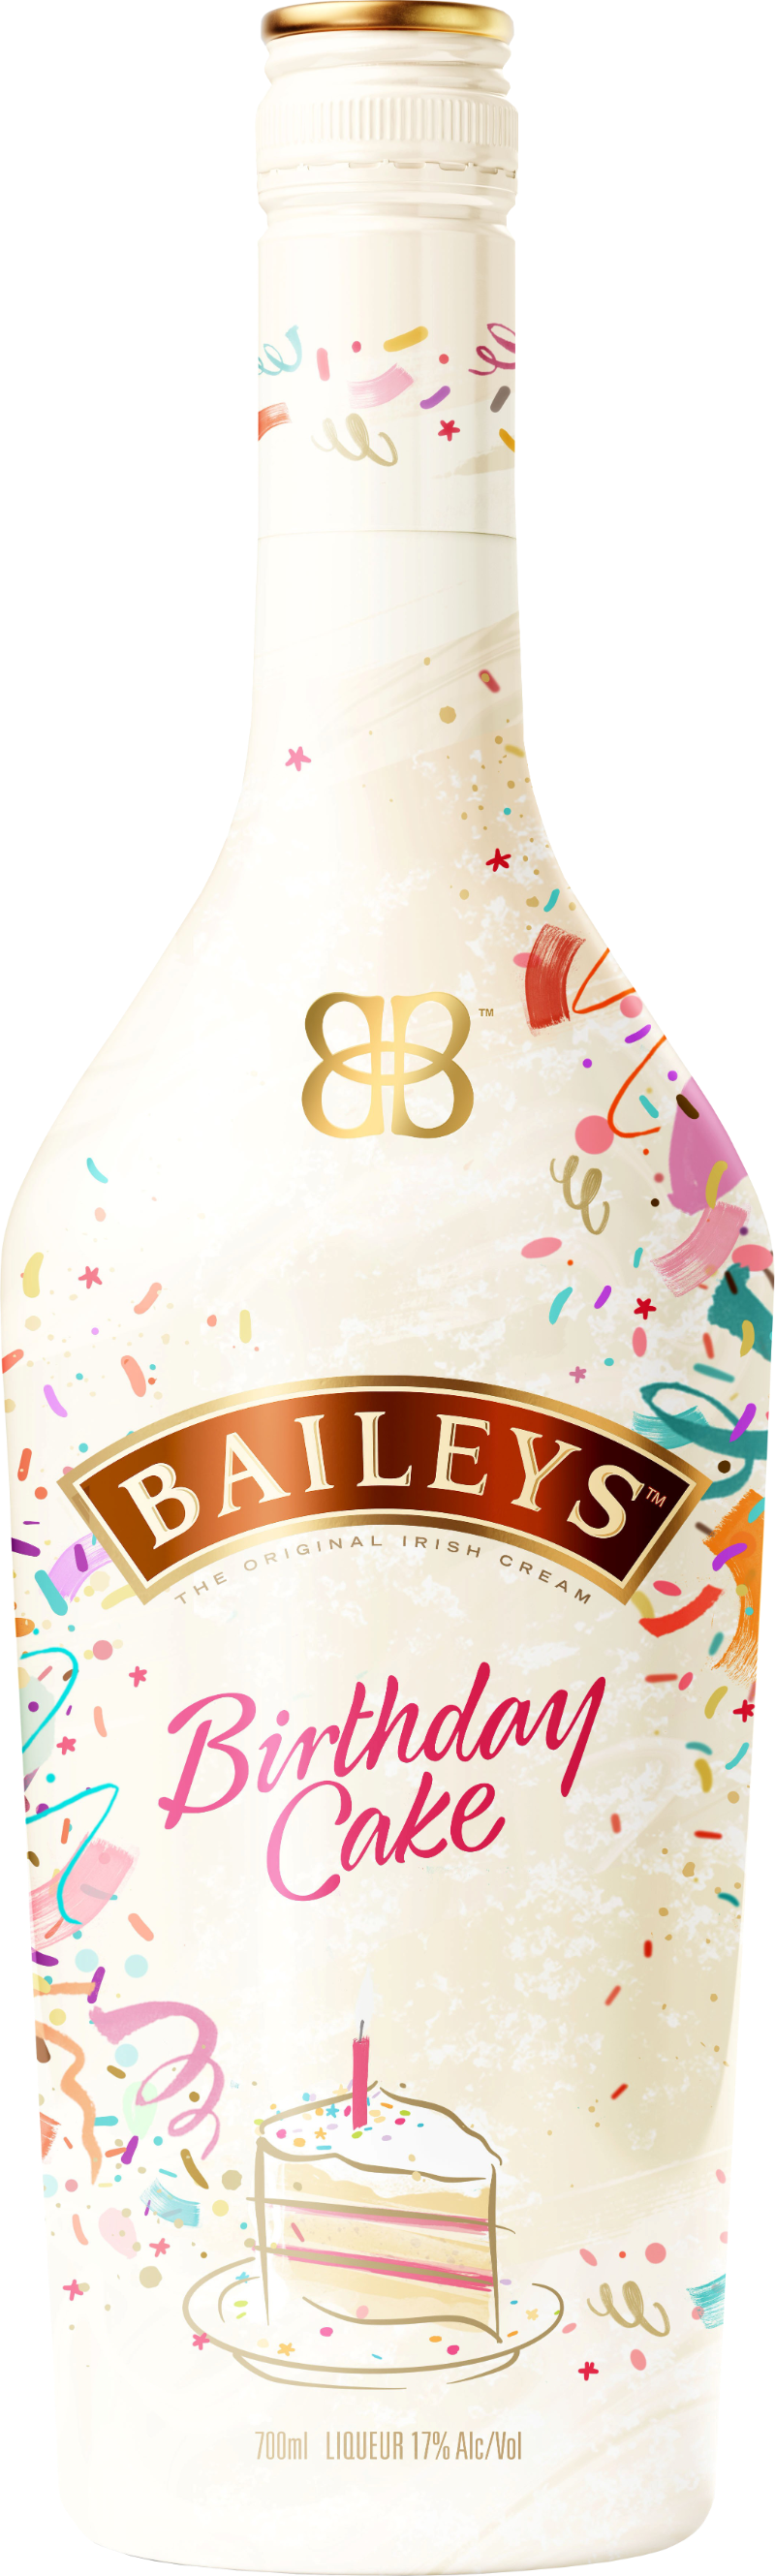 cl 70 Baileys Cake vol 17% - Birthday